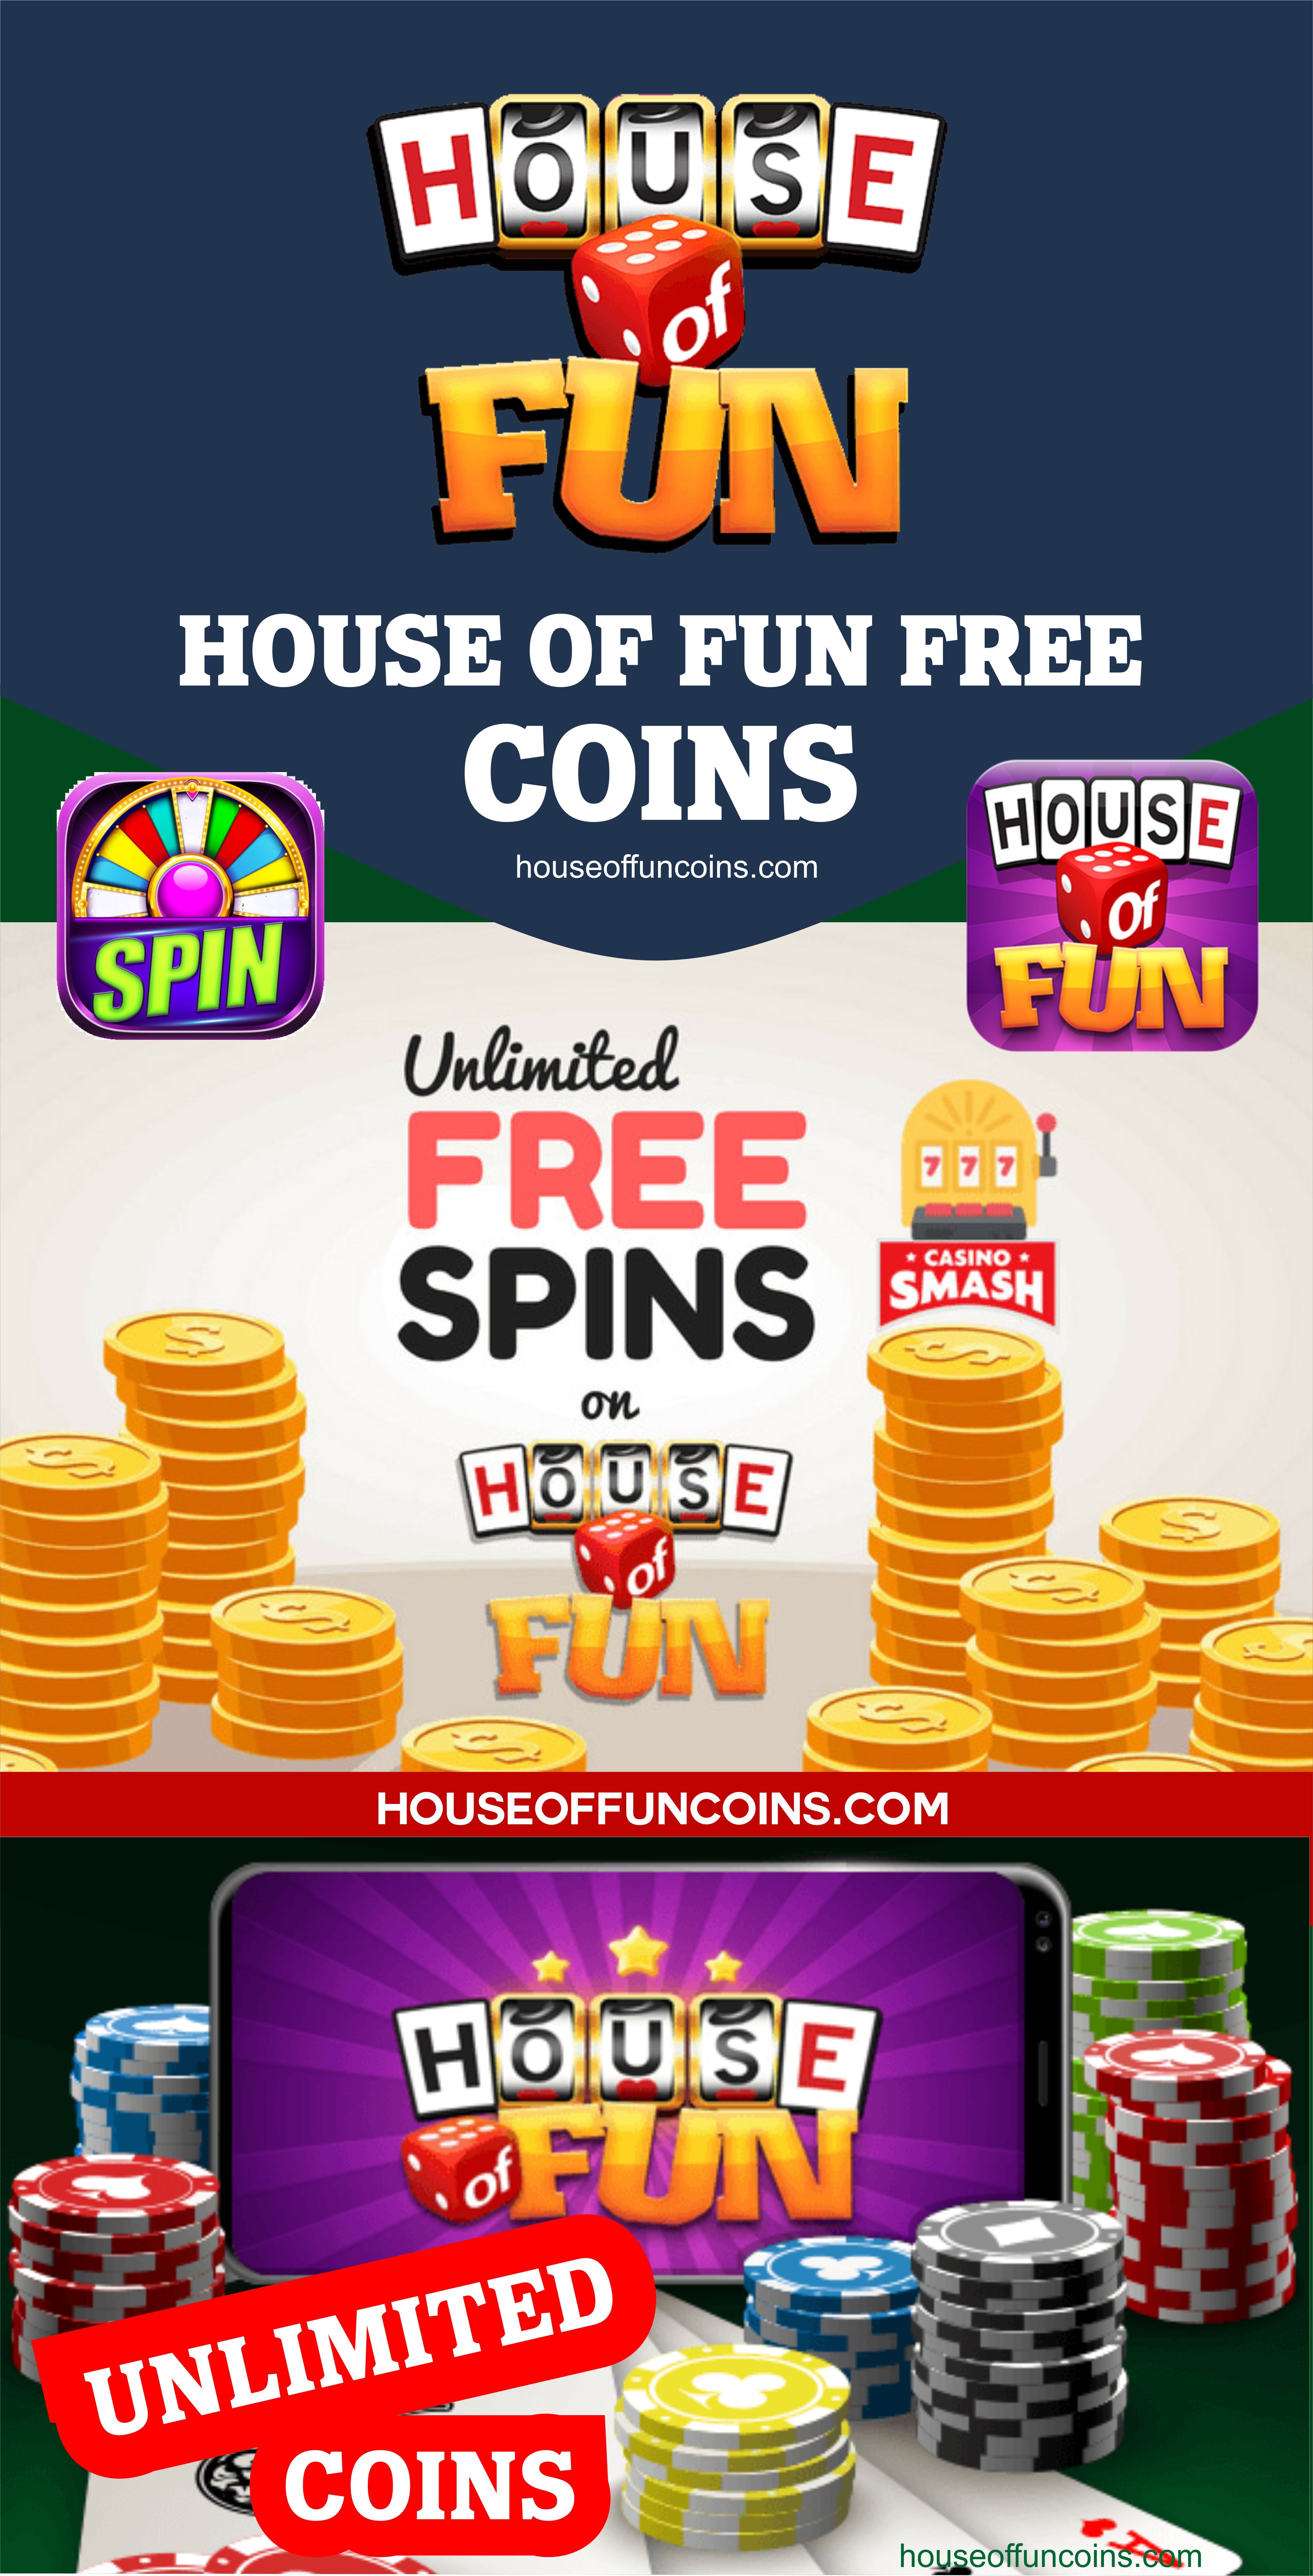 Hof free coins and bonus